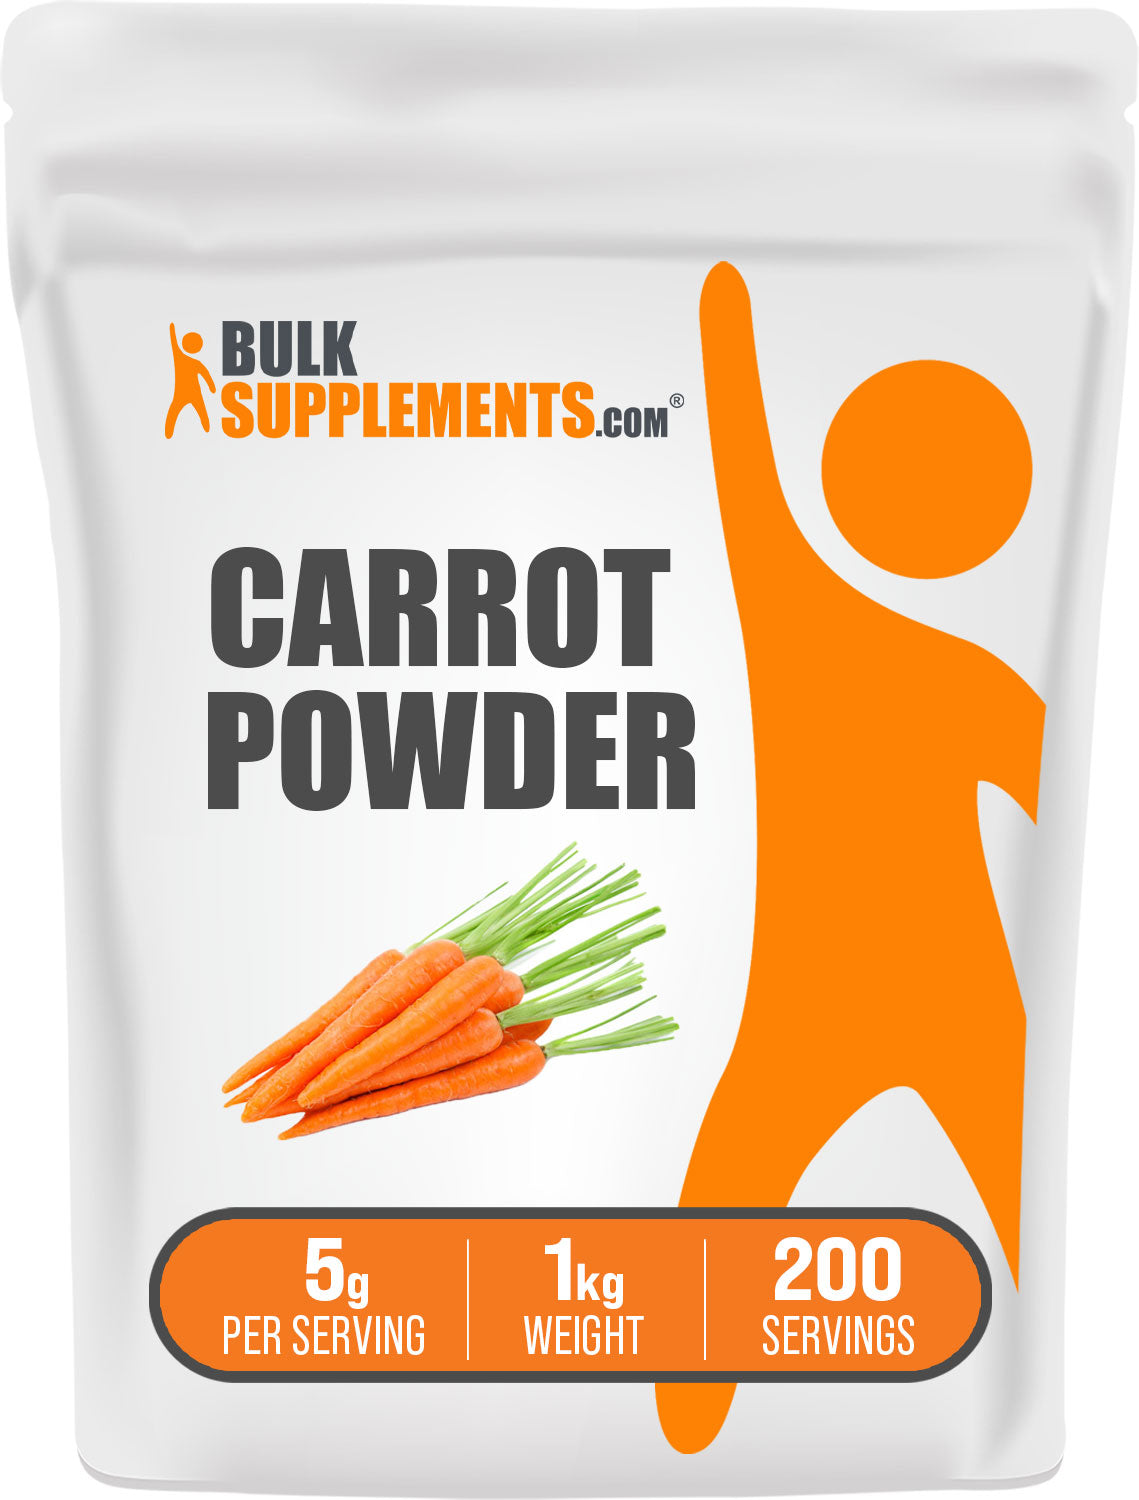 1kg of Carrot Powder